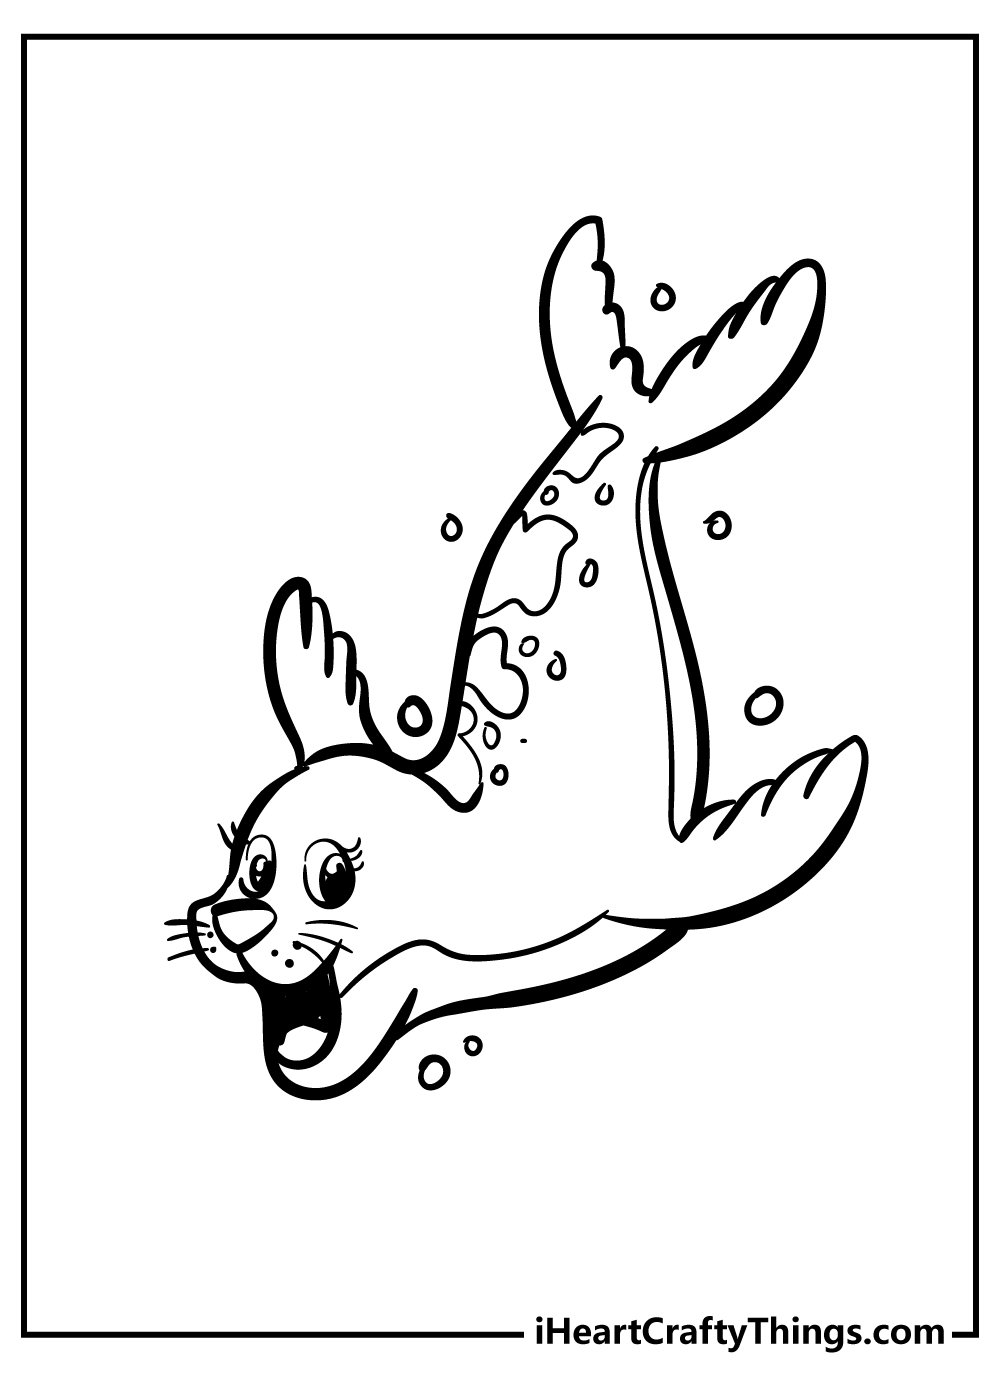 Seal Coloring Original Sheet for children free download